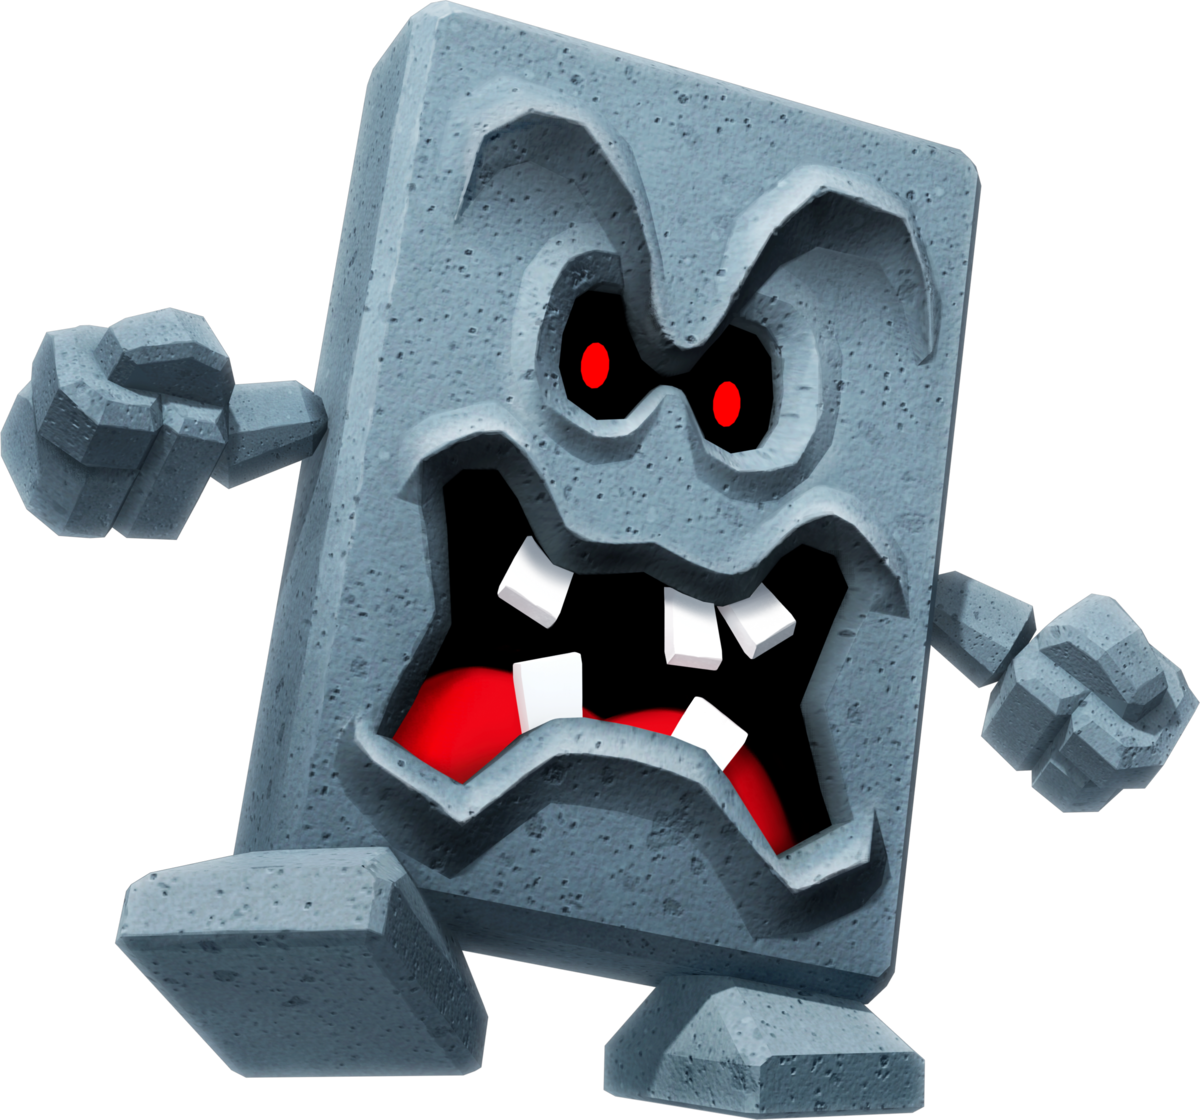 Bob-omb Squad (minigame) - Super Mario Wiki, the Mario encyclopedia